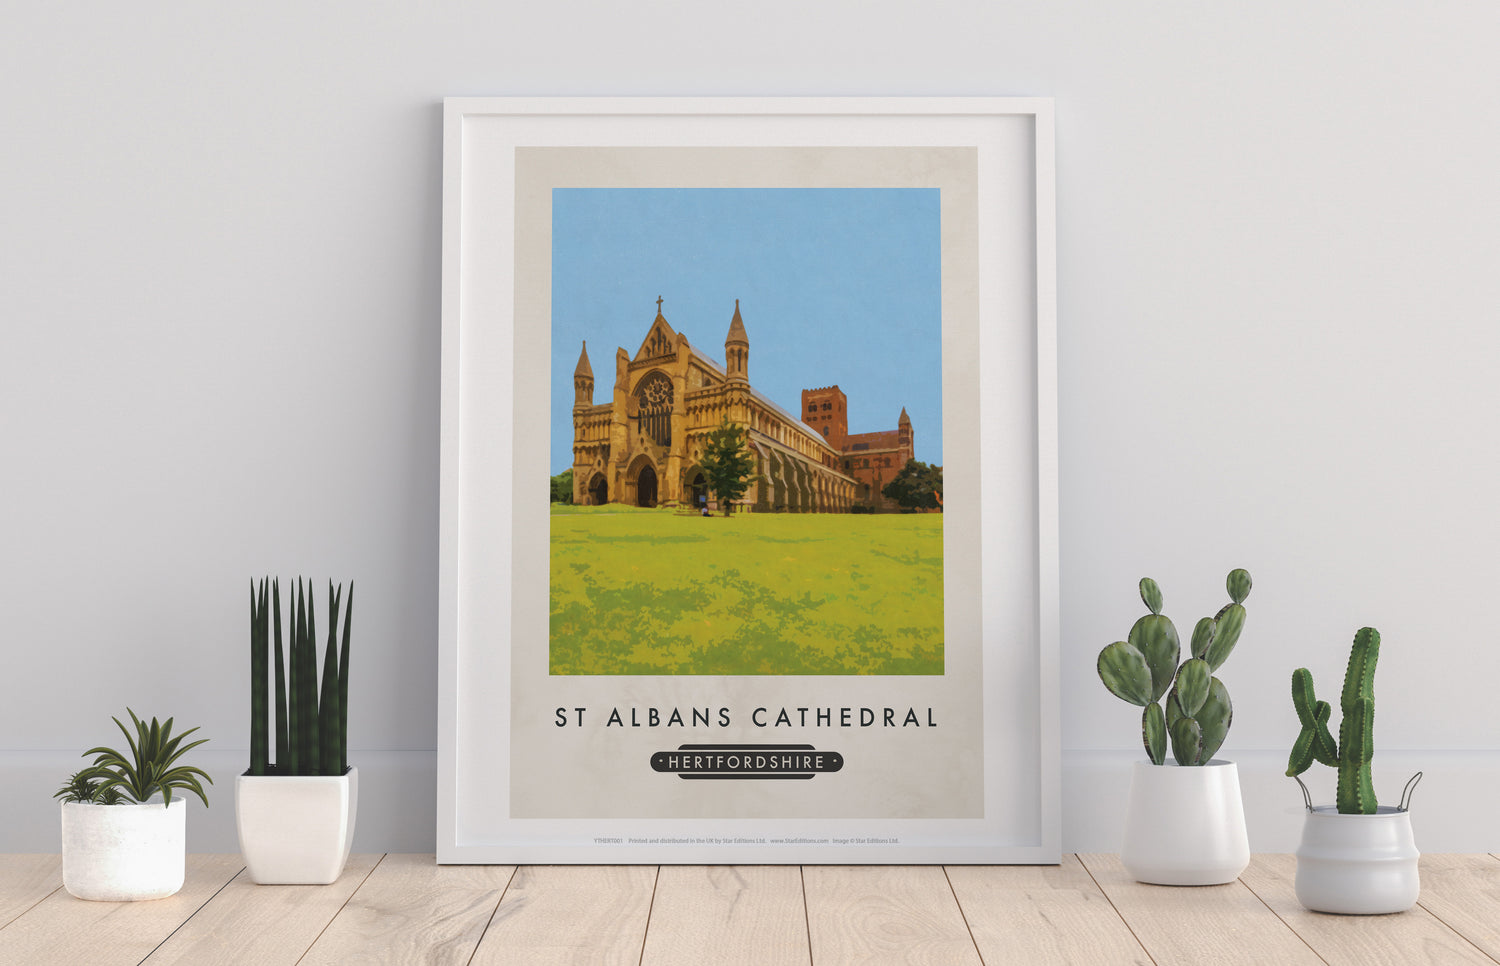 St Albans Cathedral, Hertfordshire - Art Print